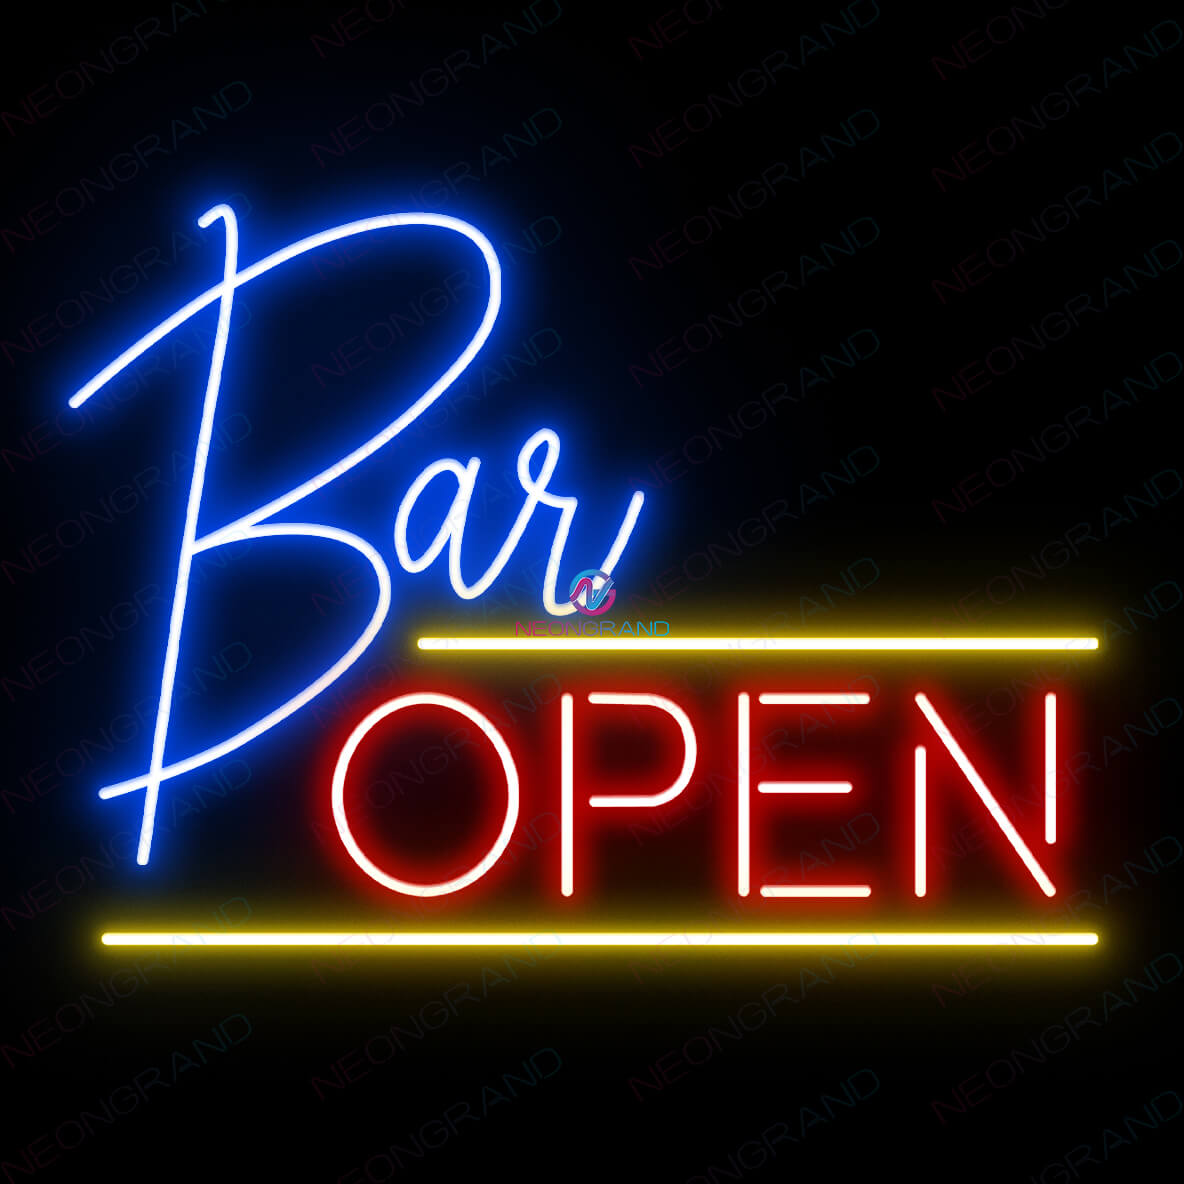 Bar Open Neon Sign Led Light Neon Signs For A Bar blue wm